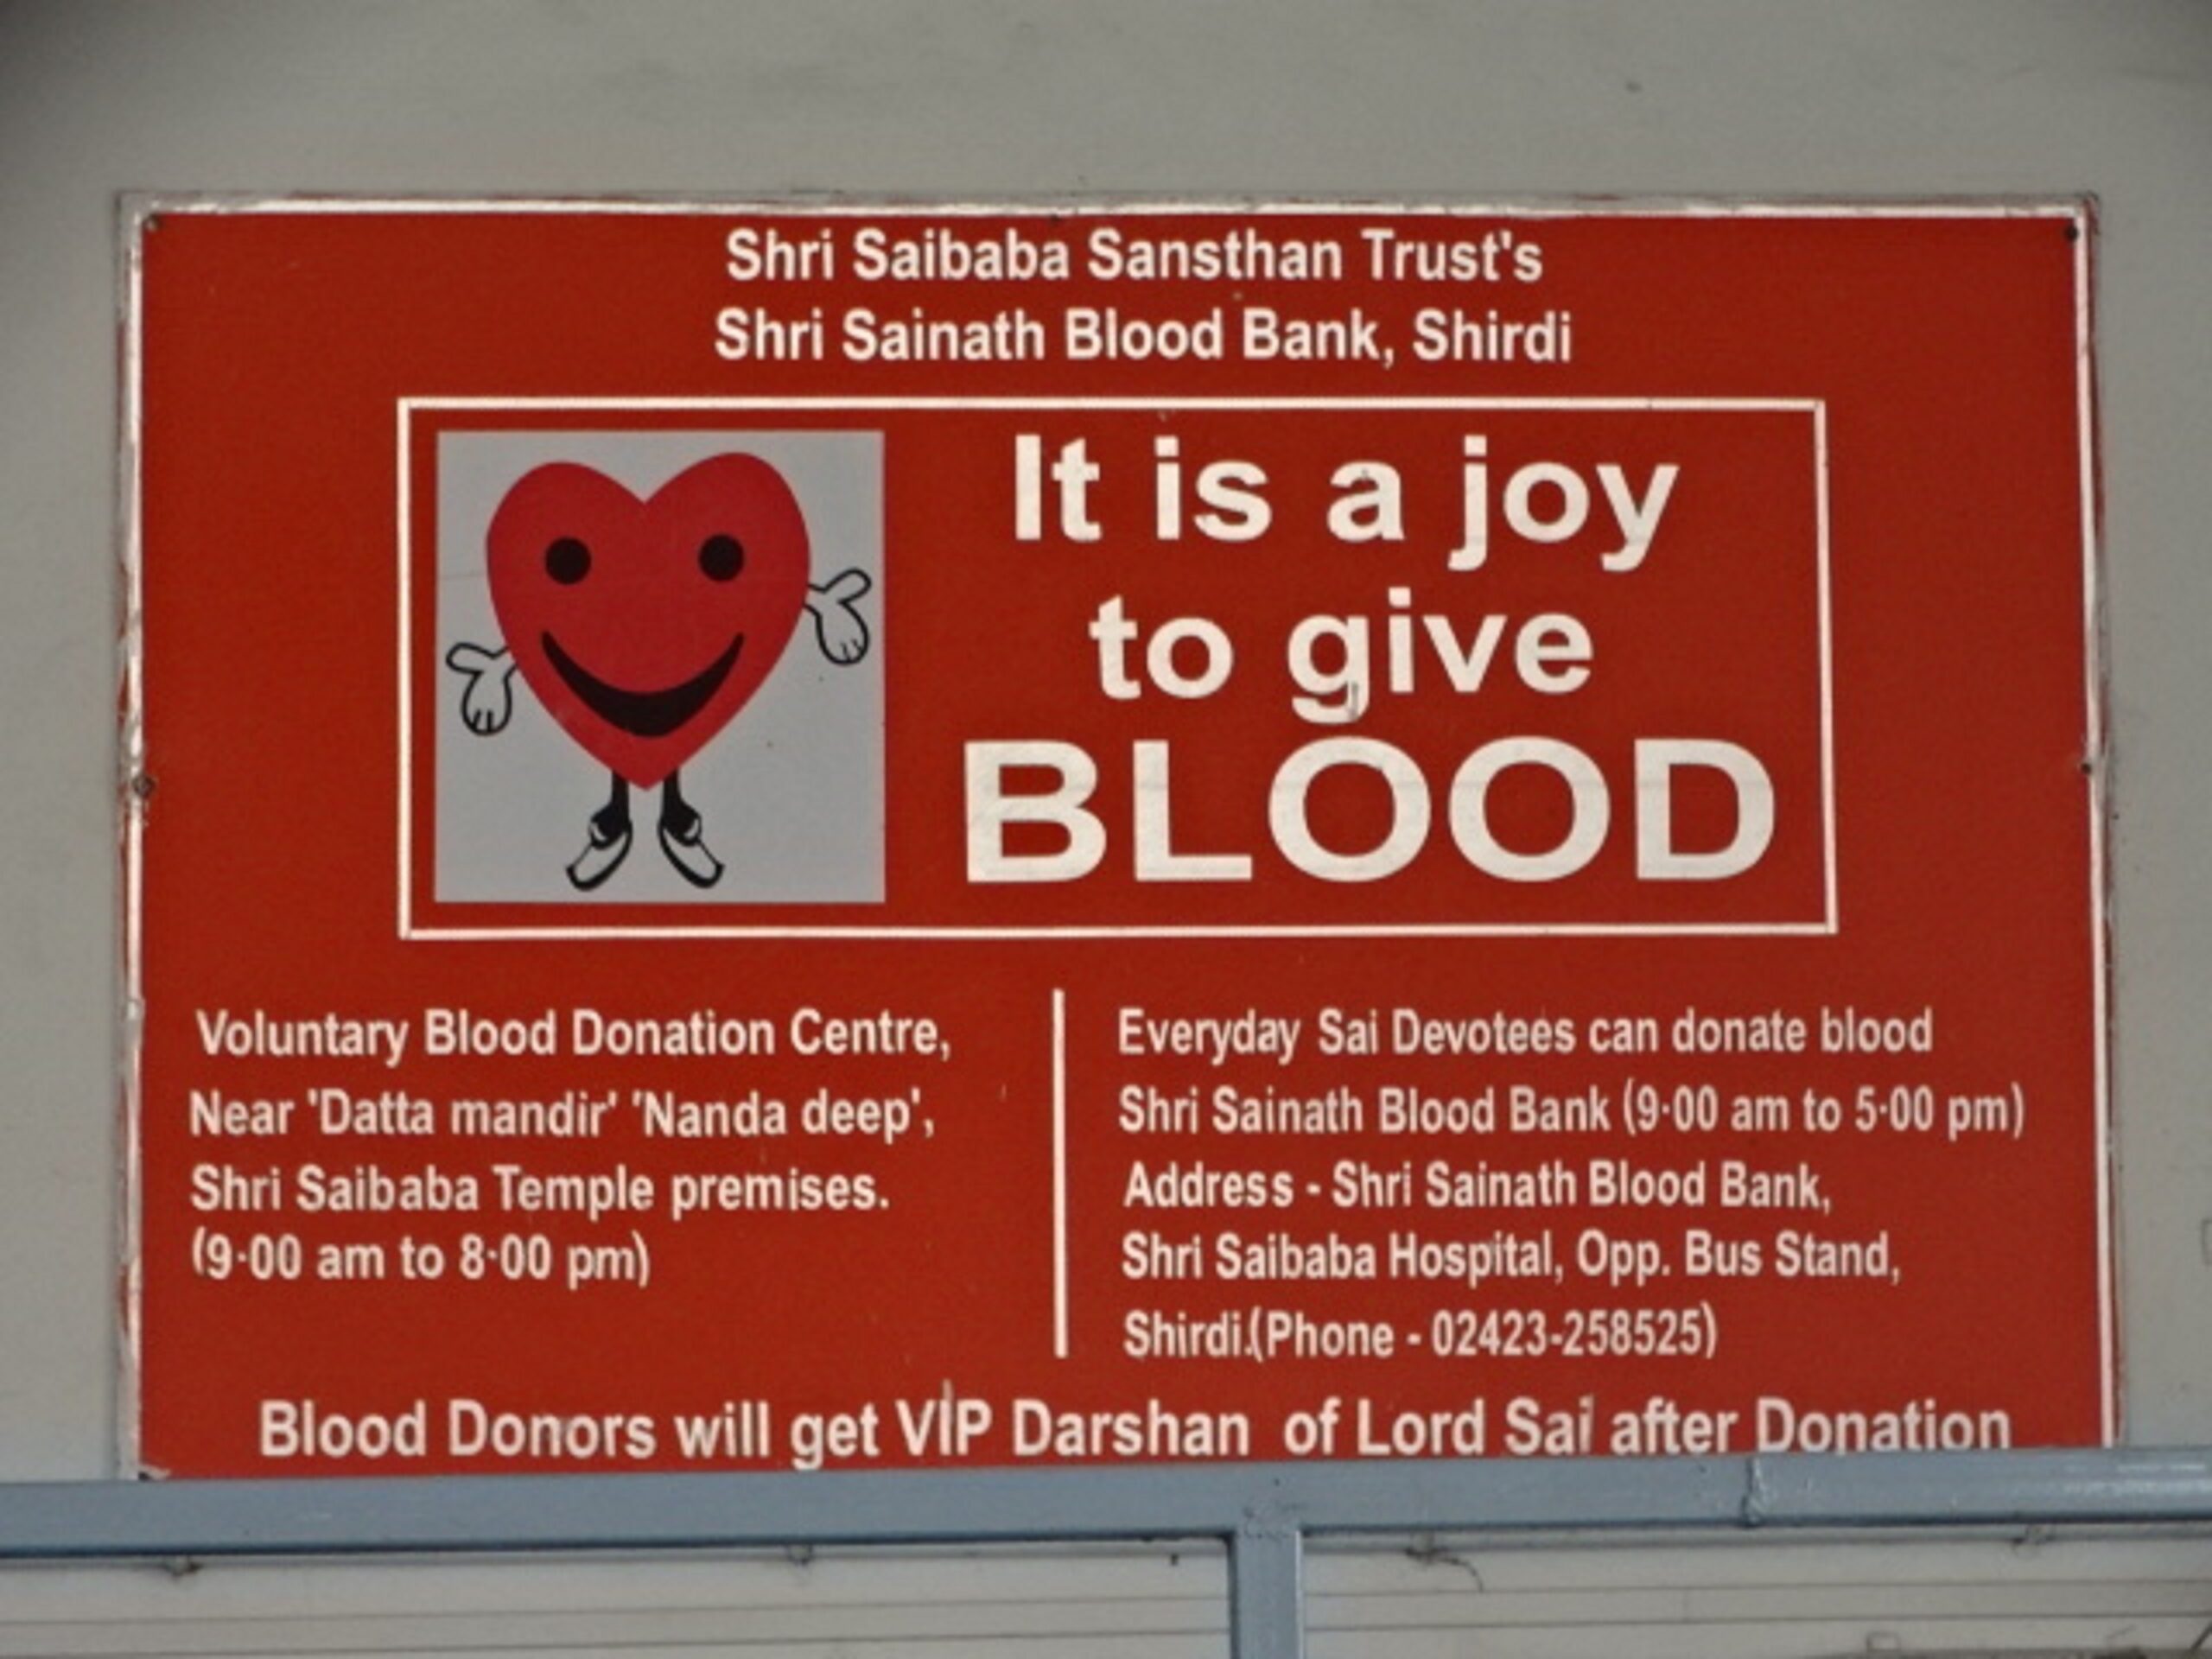 Donate Blood - Shri Saibaba Sansthan Trust, Shirdi, Maharashtra